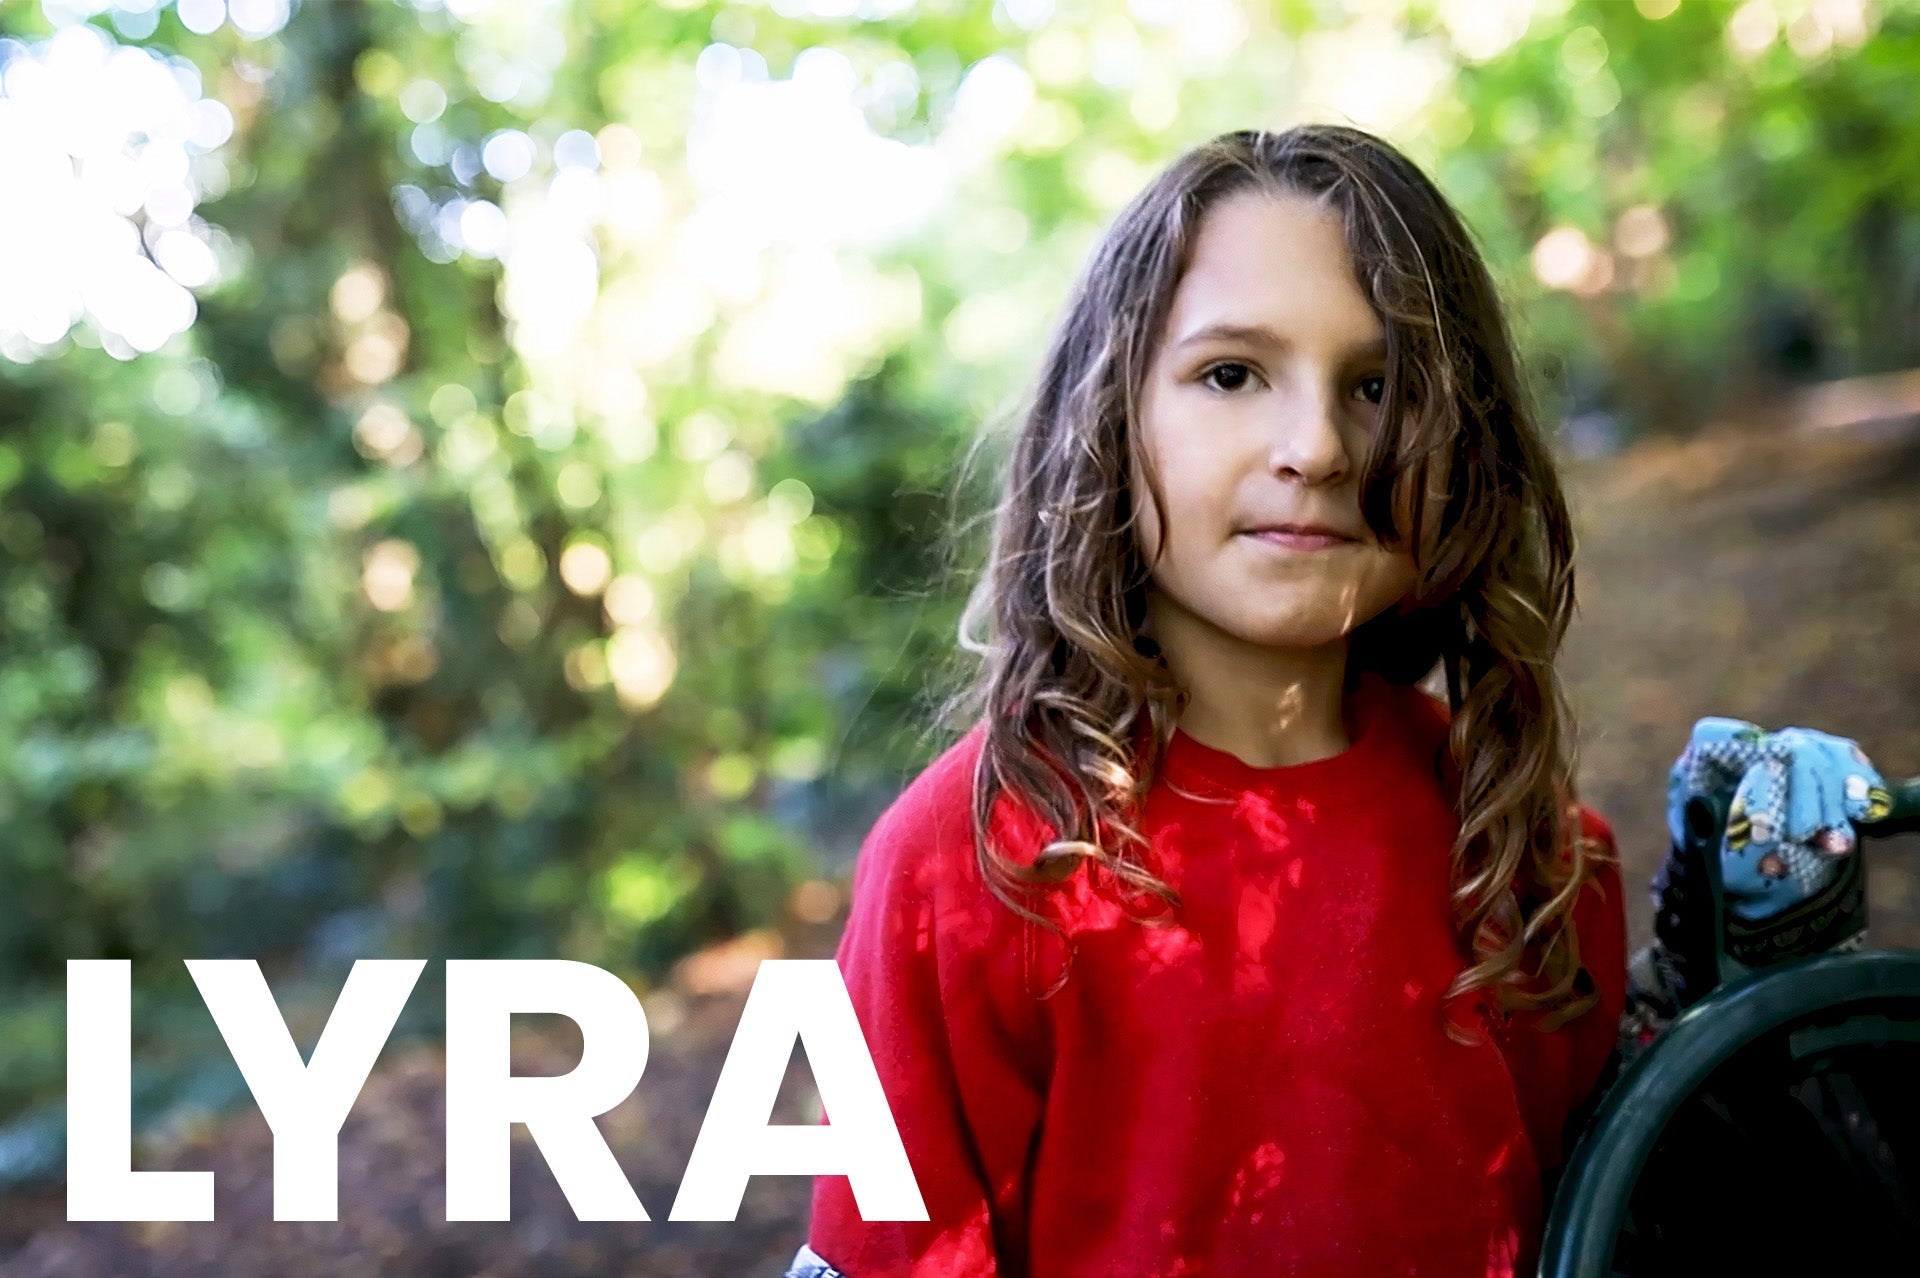 LYRA - SPOTLIGHT ON A YOUNG CHANGE MAKER - Waterhaul